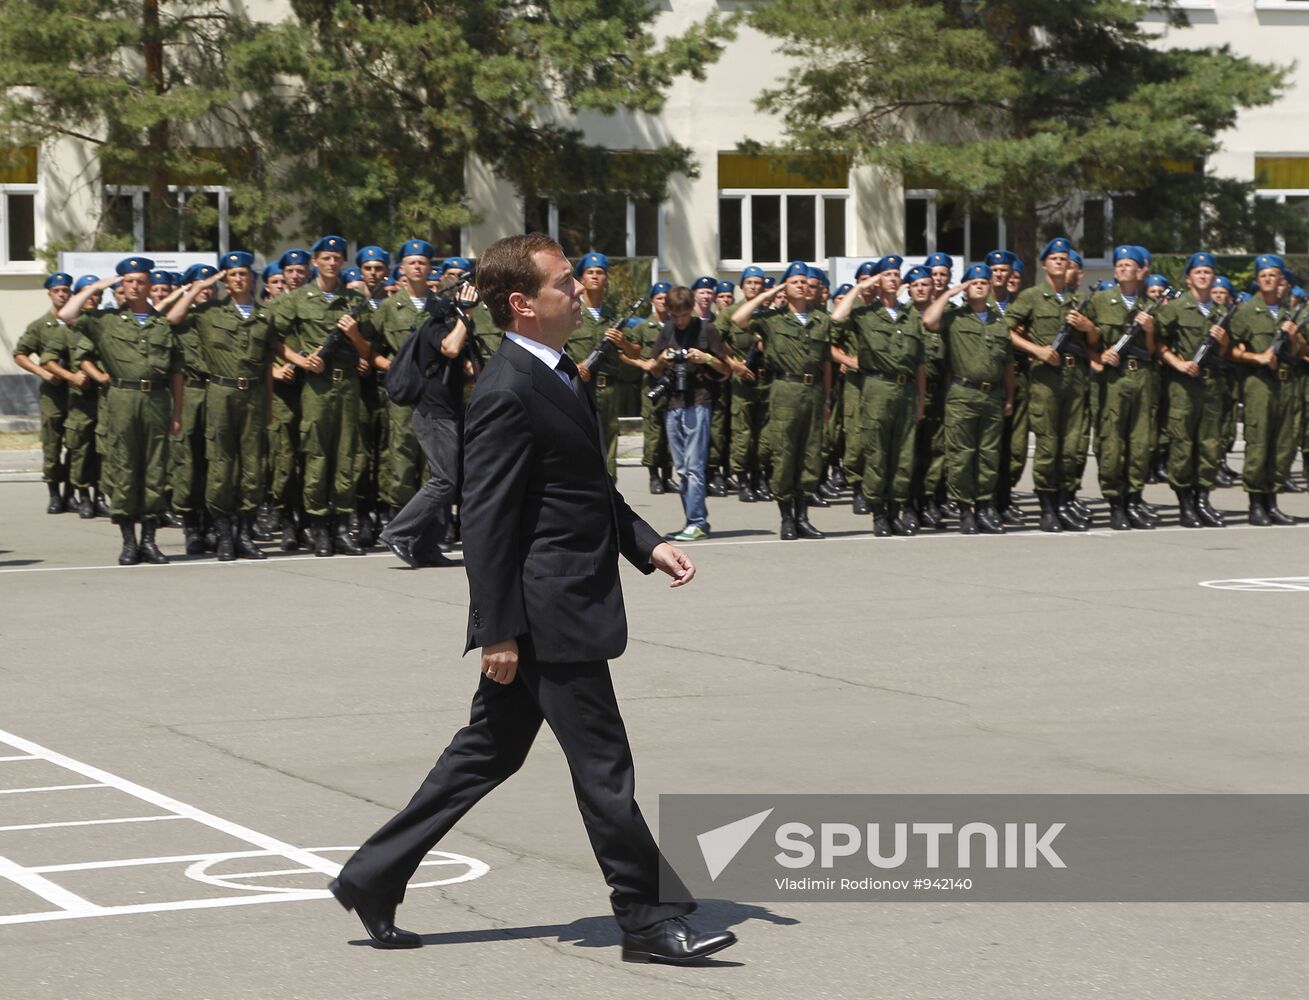 D.Medvedev's working visit to Krasnodar Territory